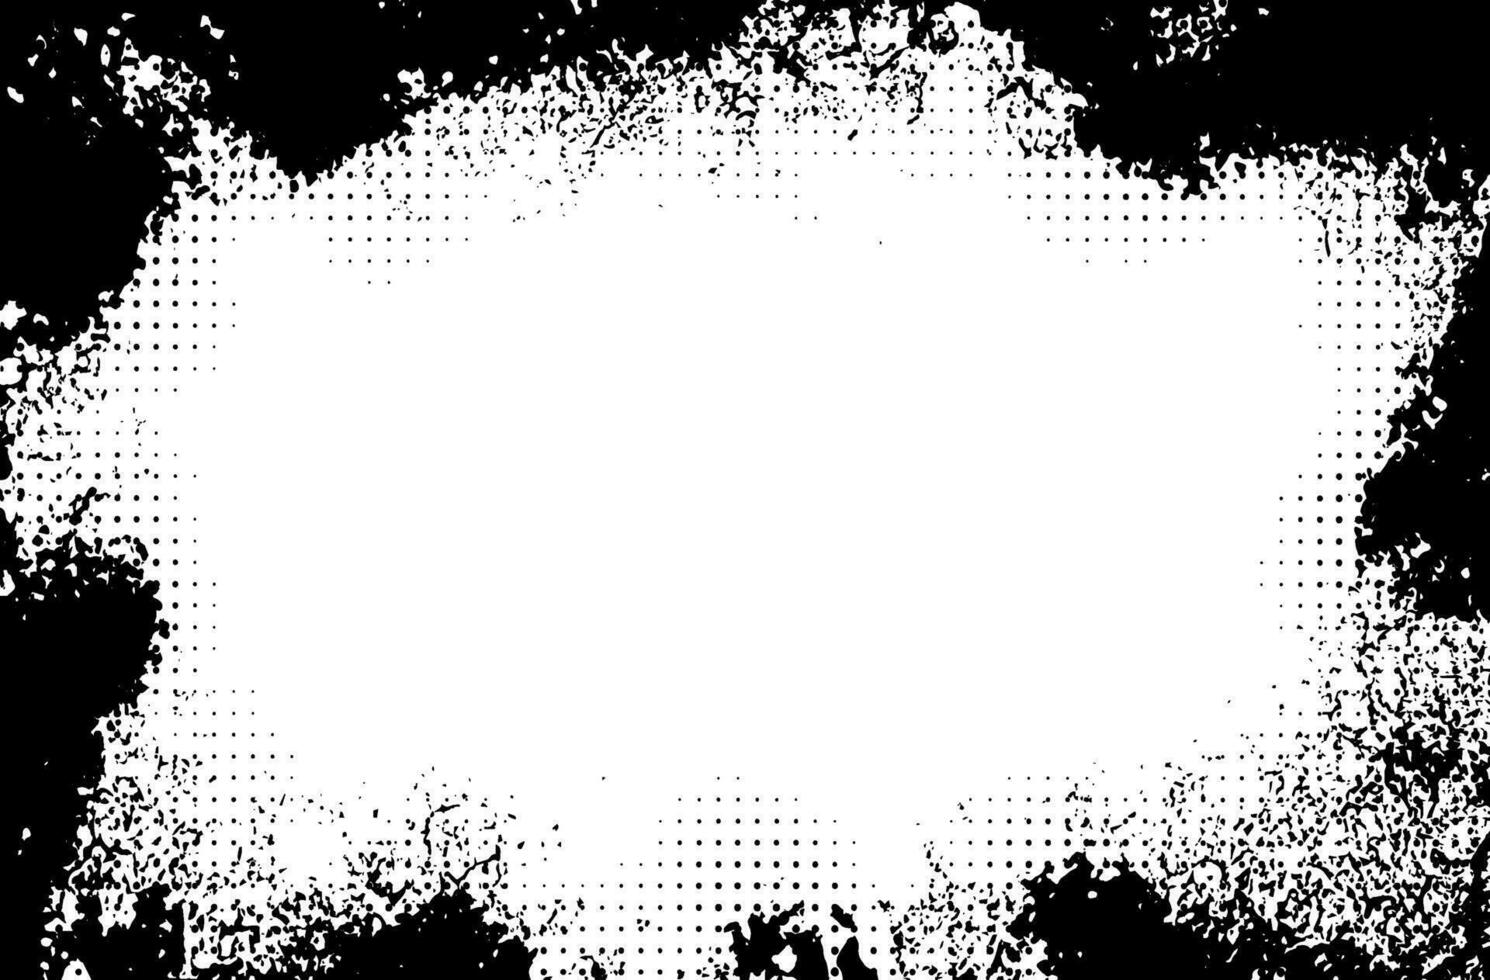 black and white frame border, black and white frame, a black and white frame with a white grunge halftone dot vintage photo rectangle border, , a black and white grunge background with a white spot vector